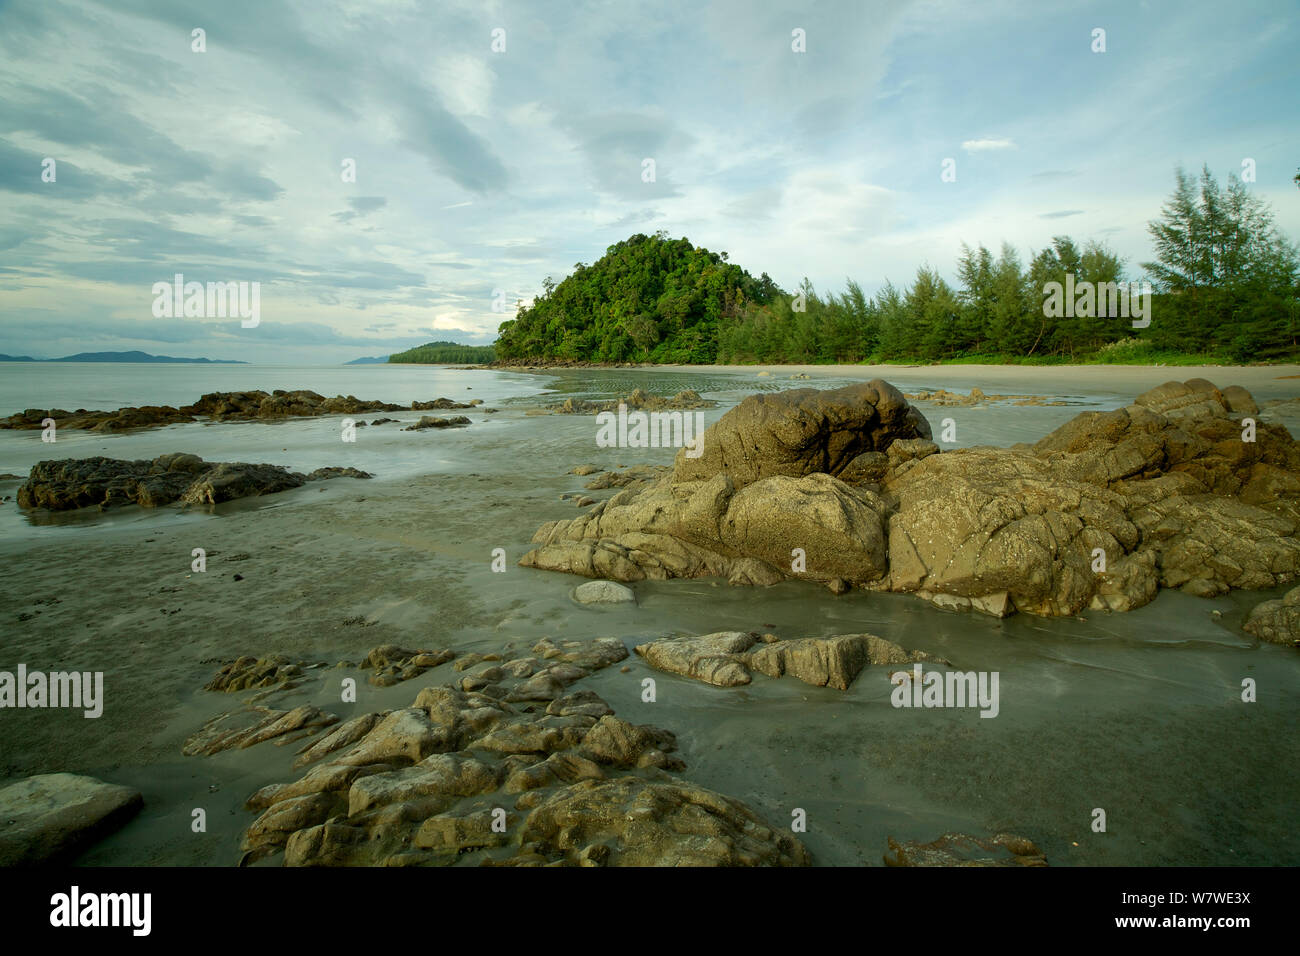 Landscape with Piak Nam Yai Island, Thailand’s Laem Son National Park, Thailand, December 2012. Stock Photo